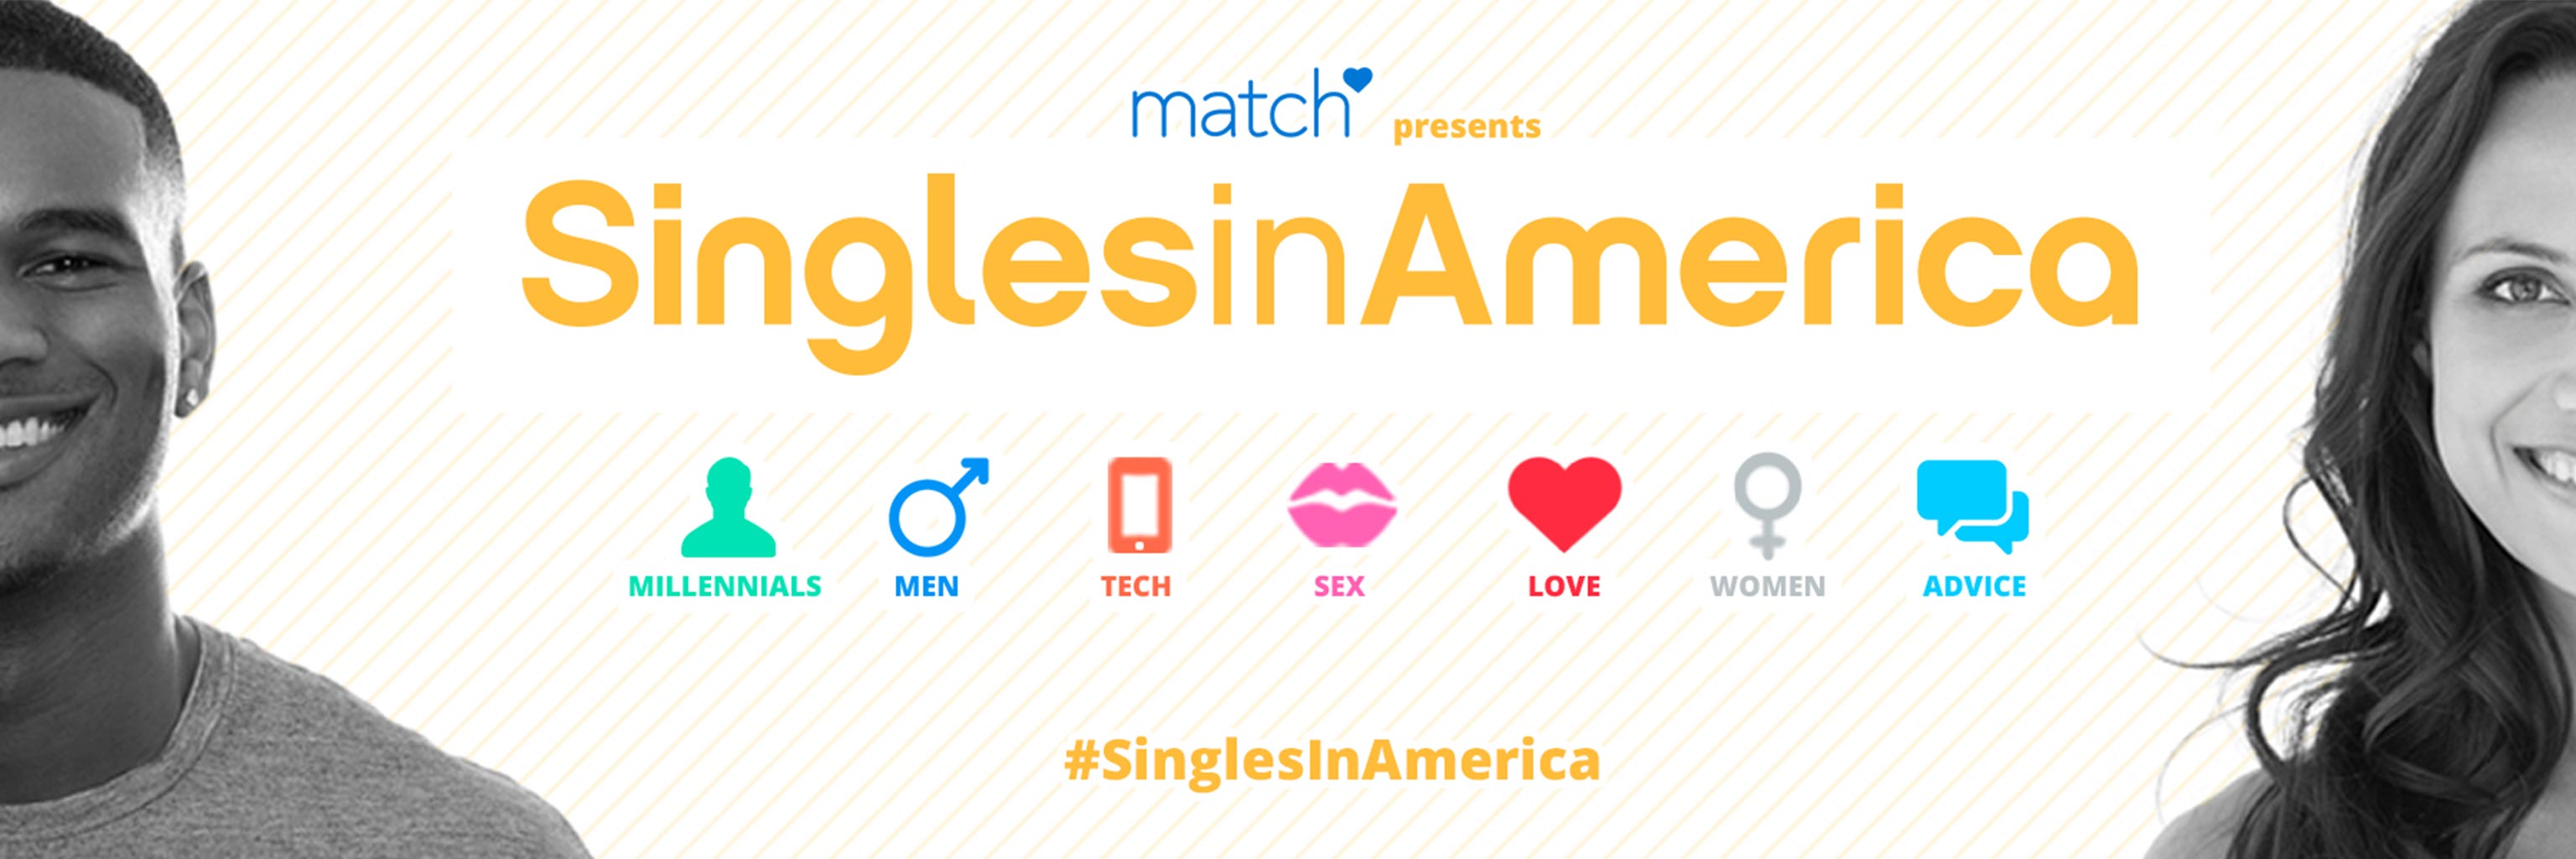 Singles in America study